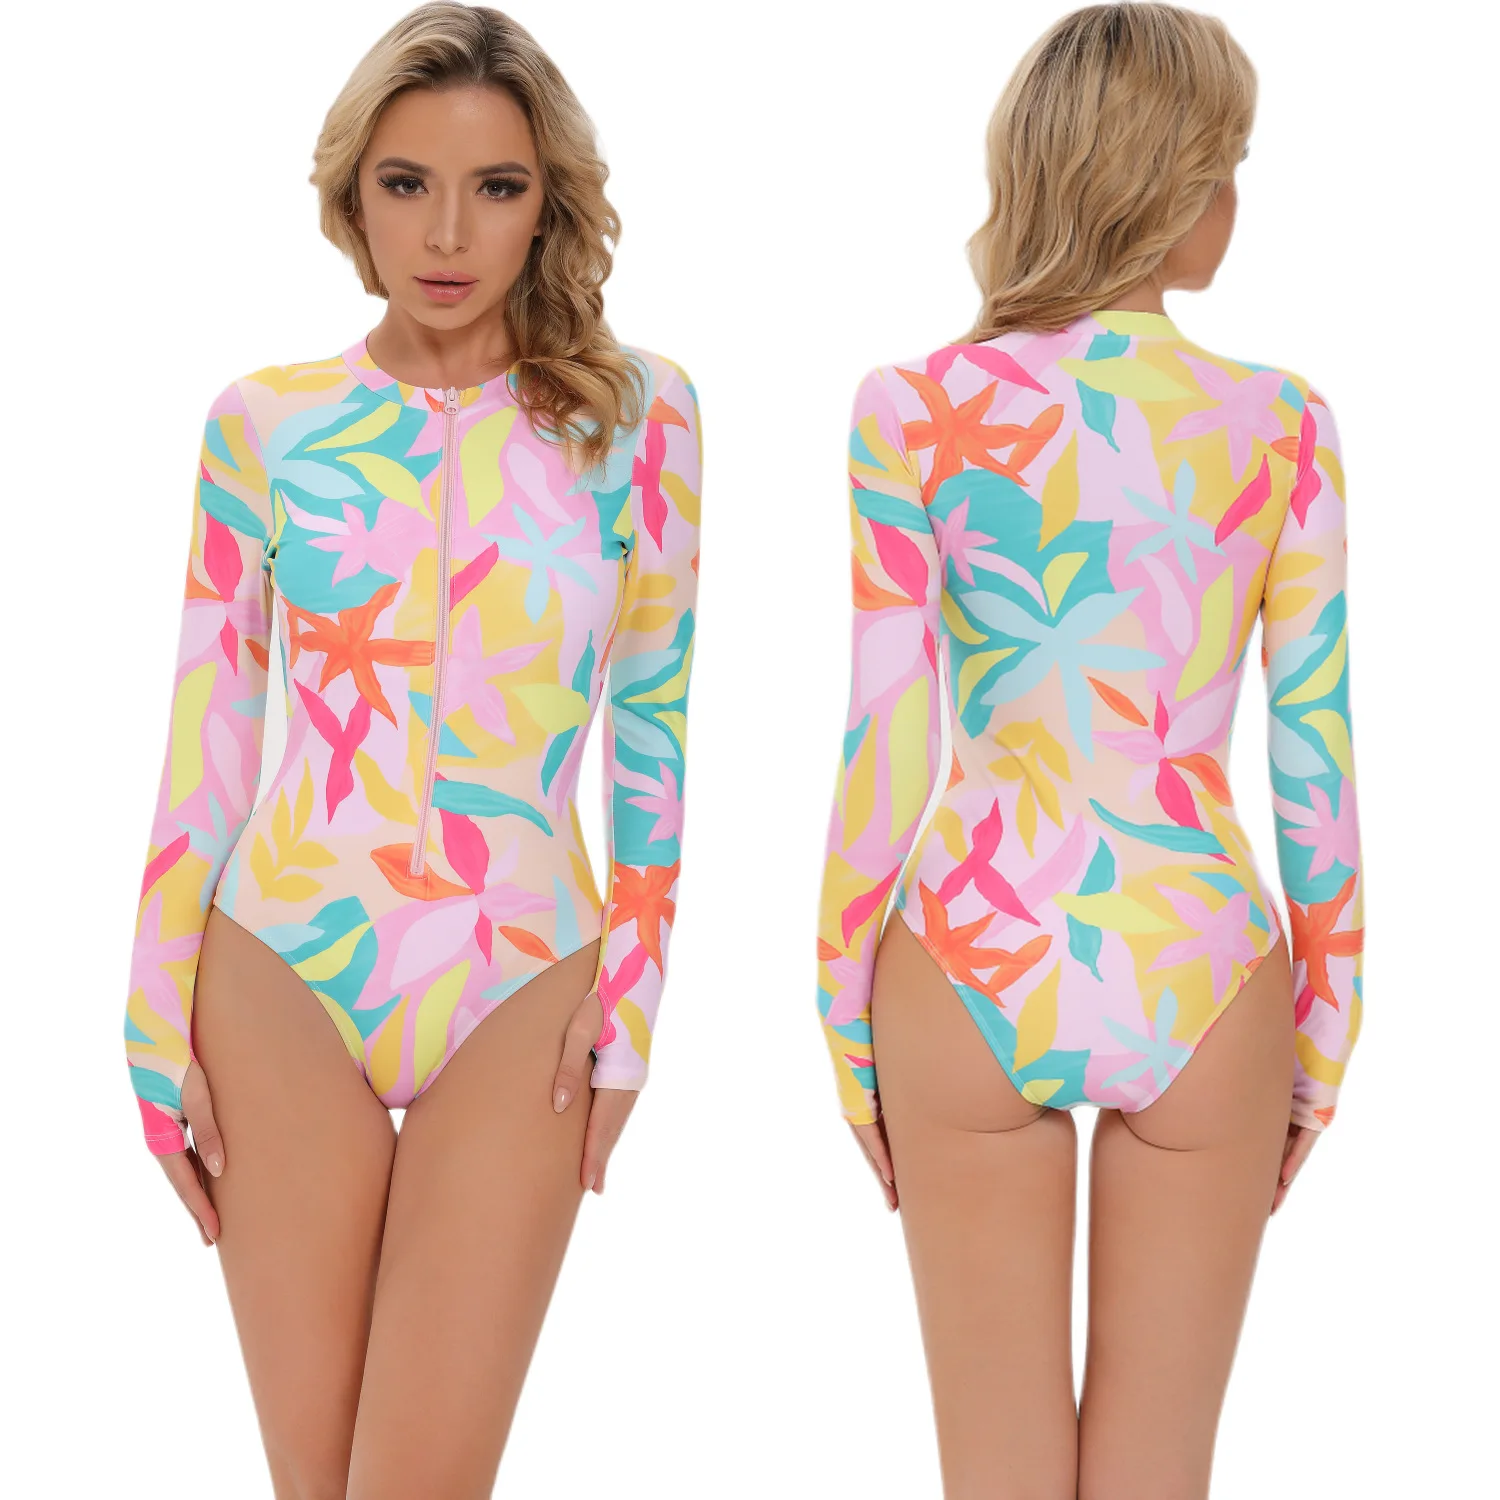 Zipper Swimsuit Women's Sports Long Sleeve Swimsuit Printed Sunscreen Surfing Suit Jellyfish Suit Snorkeling Suit